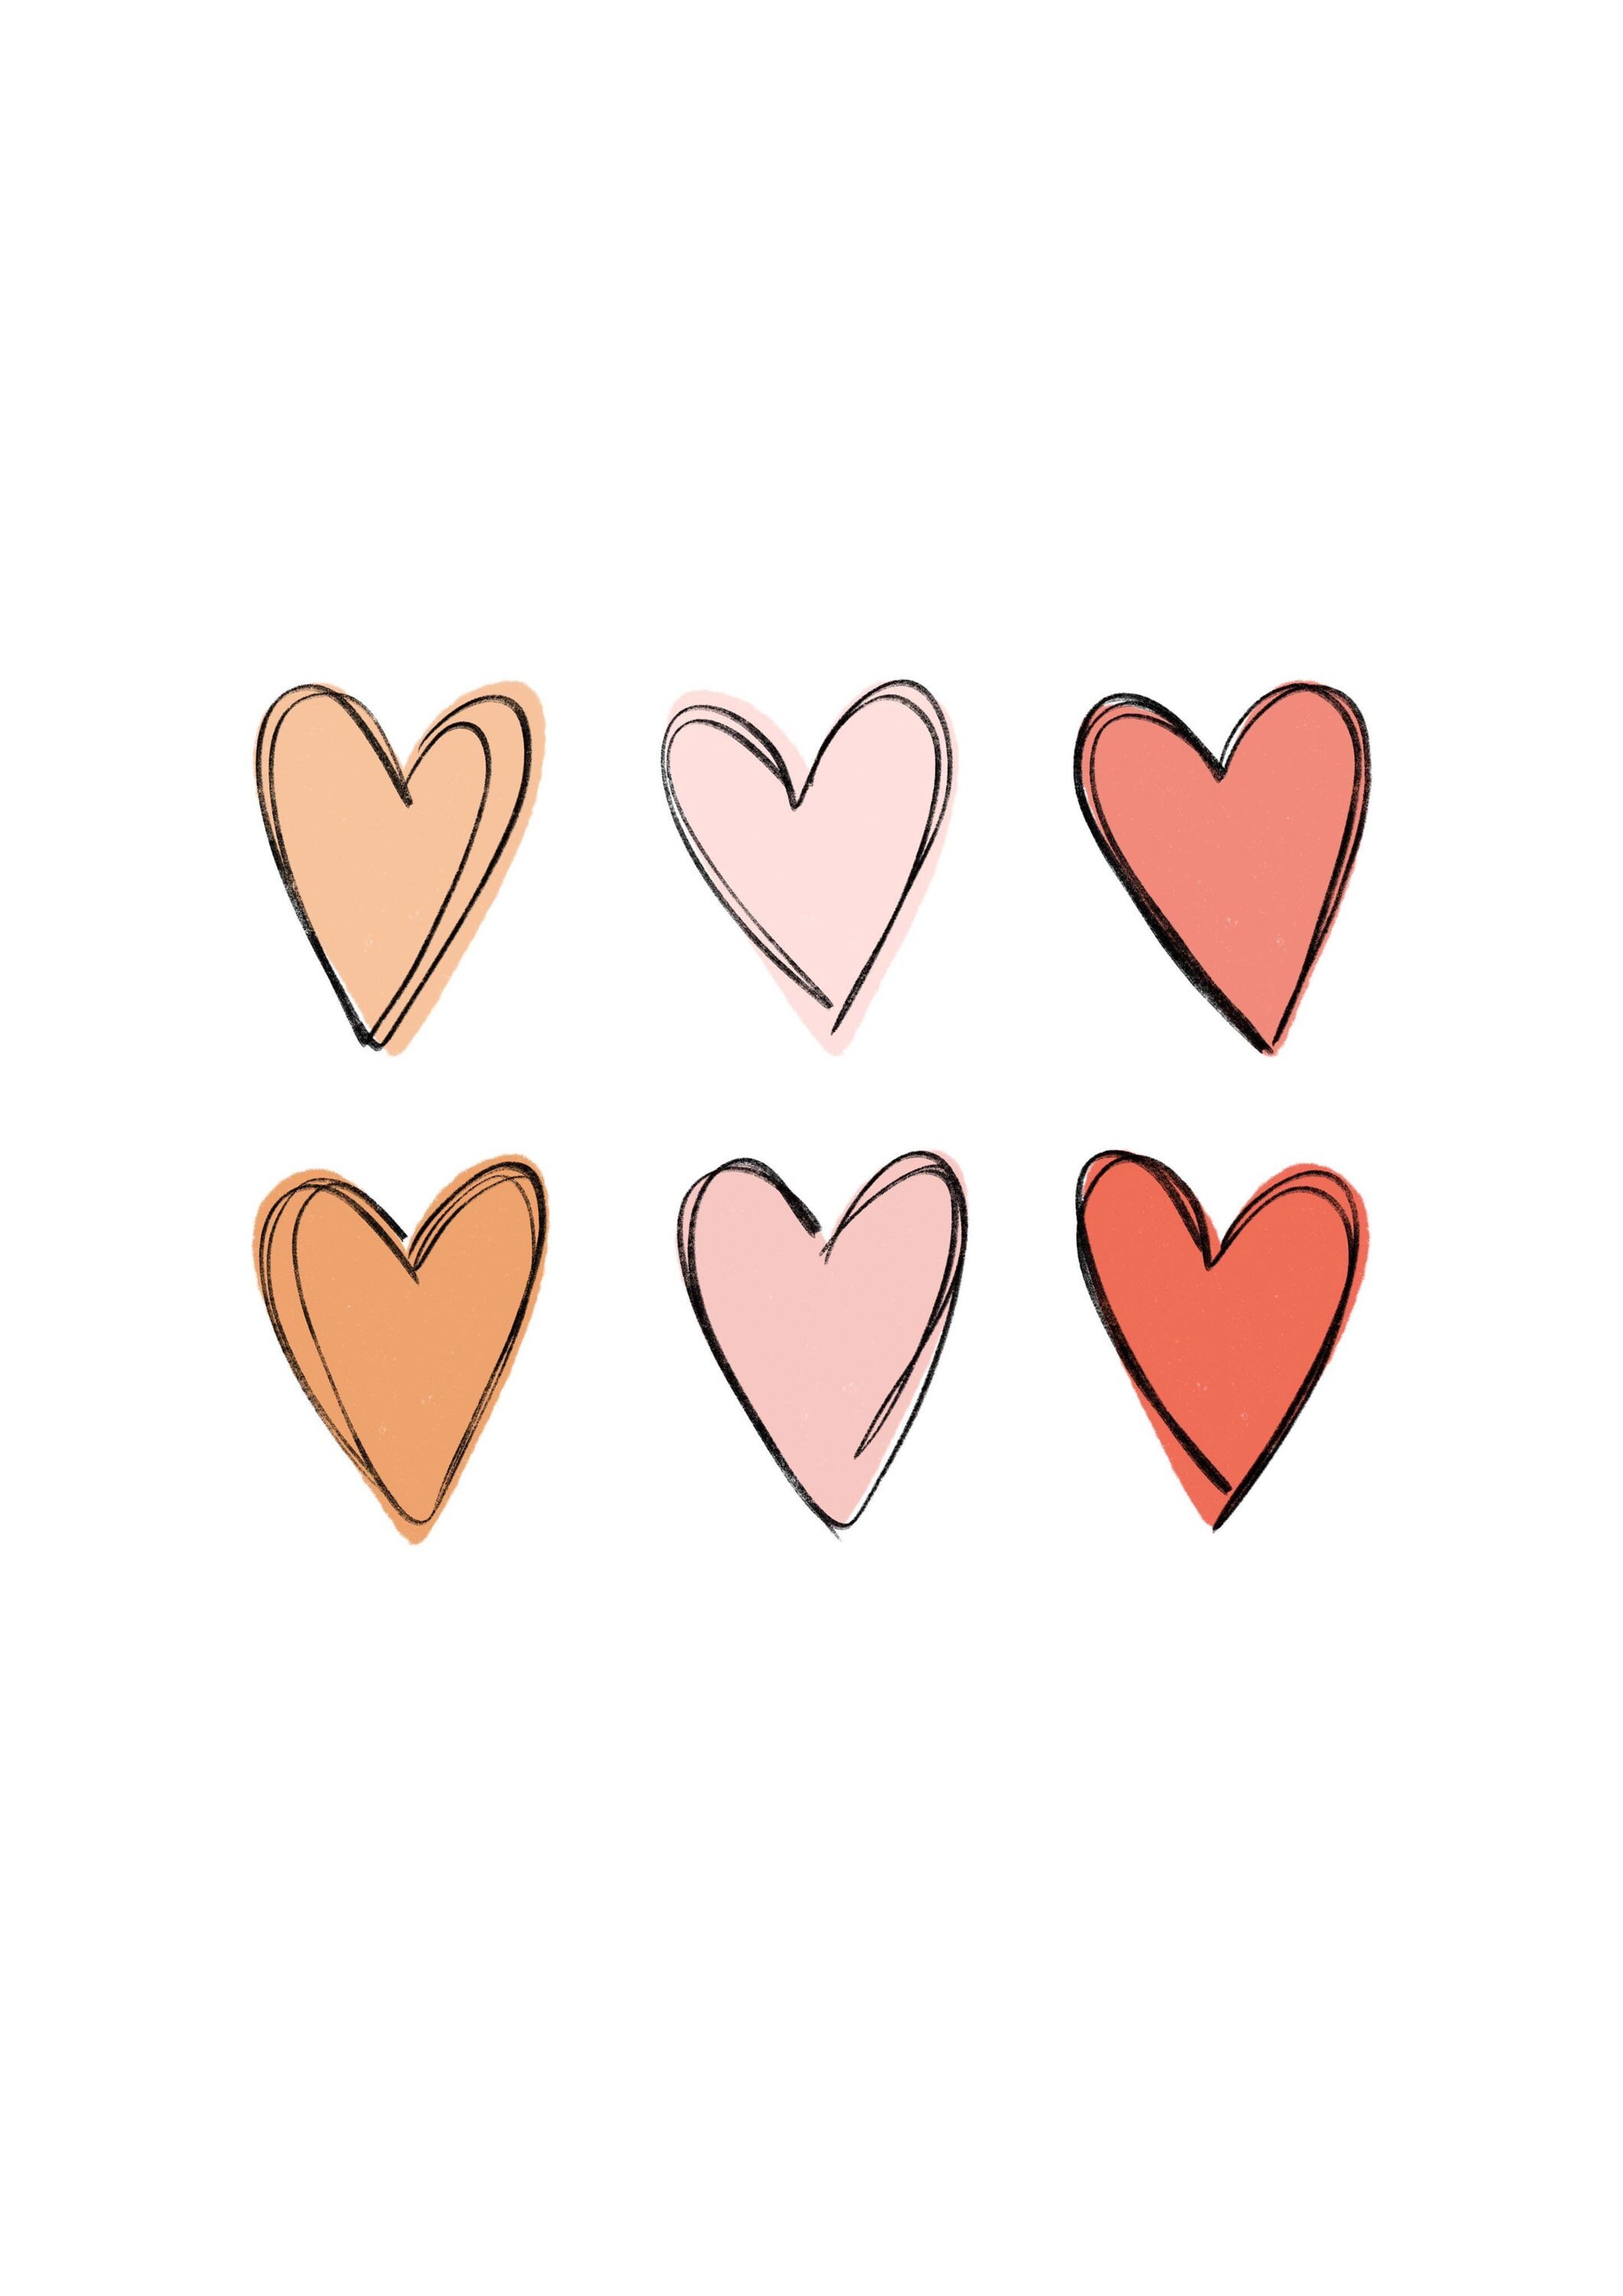 Minimalistic Heart Print A4 A5 Cute Hearts Sketch | Etsy